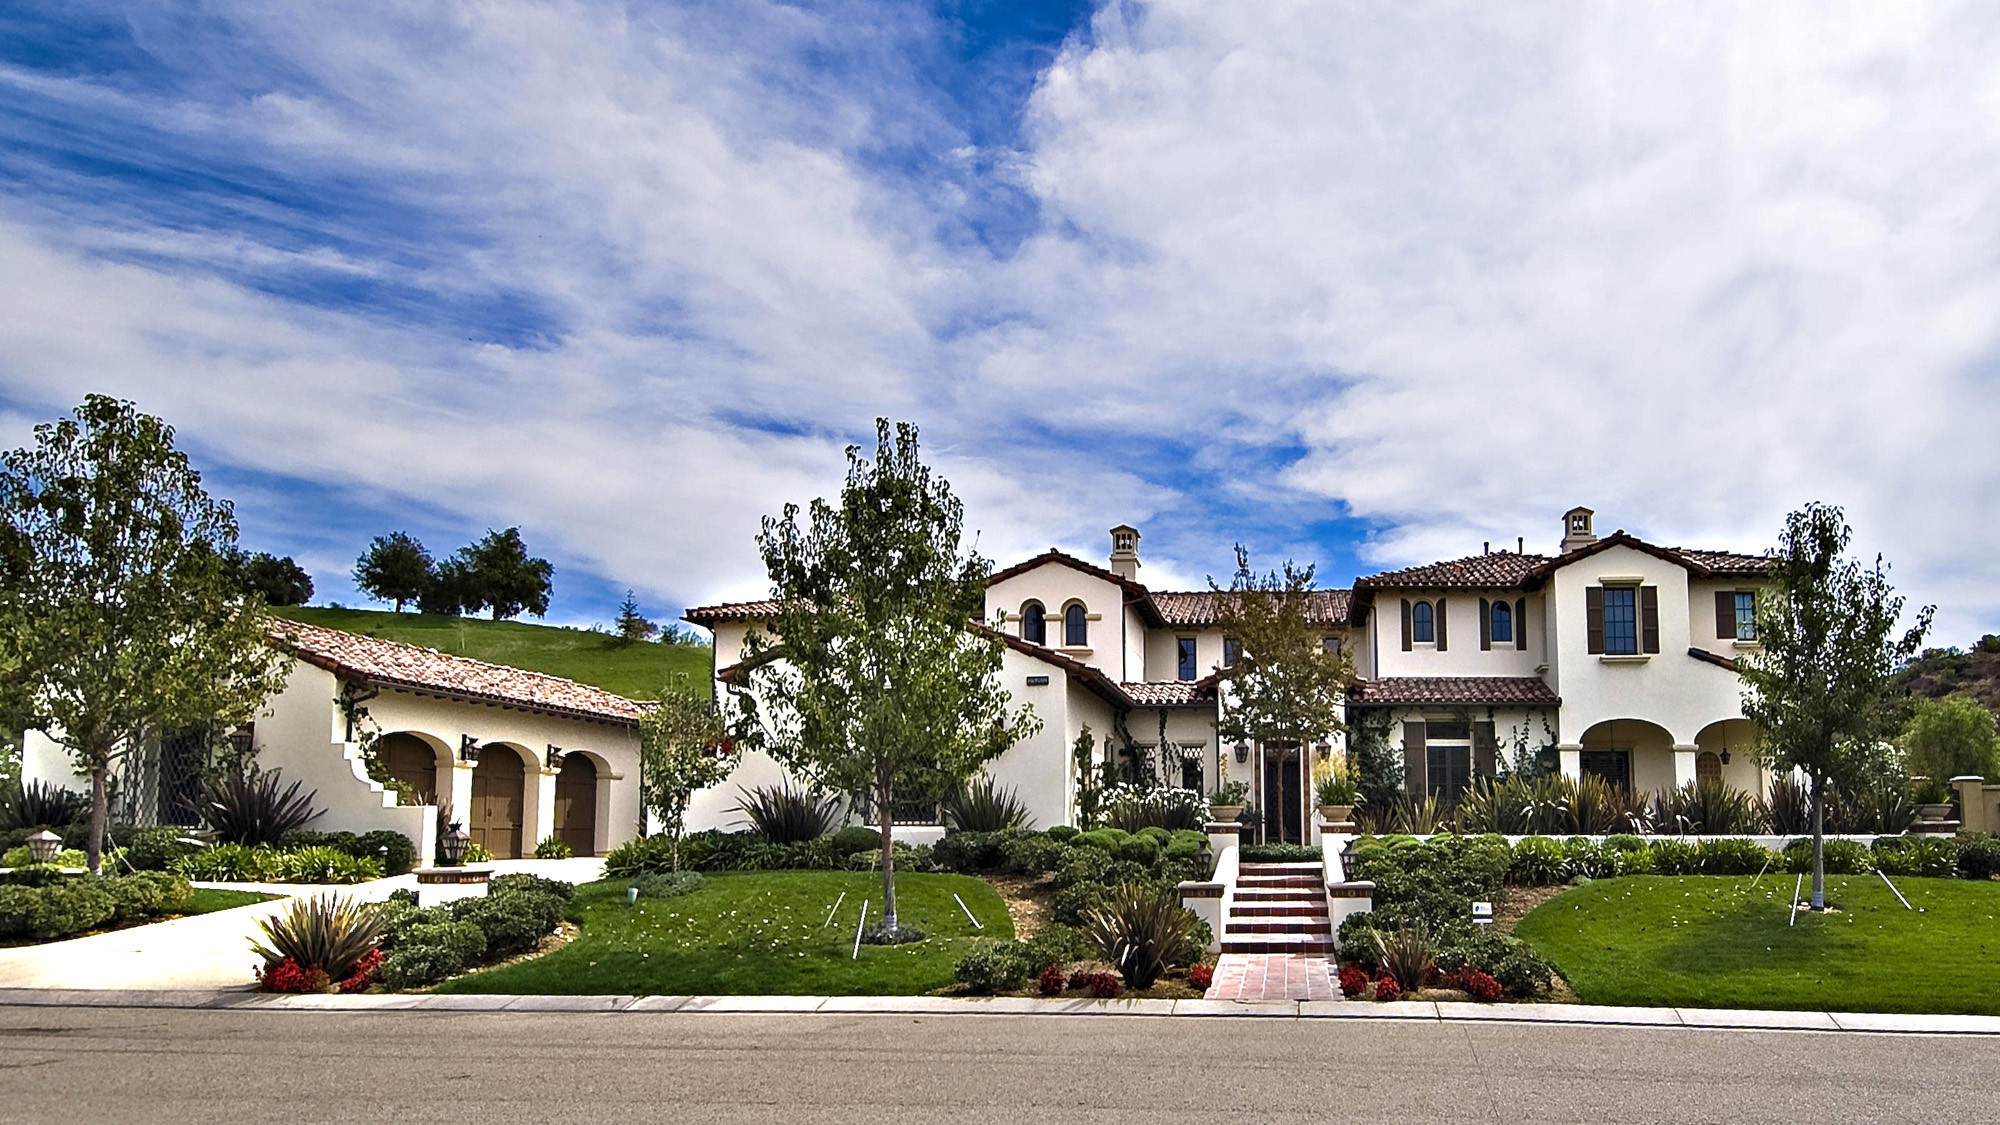 Hot Property                        Justin Bieber's home sells to Khloe Kardashian for $7.2 million